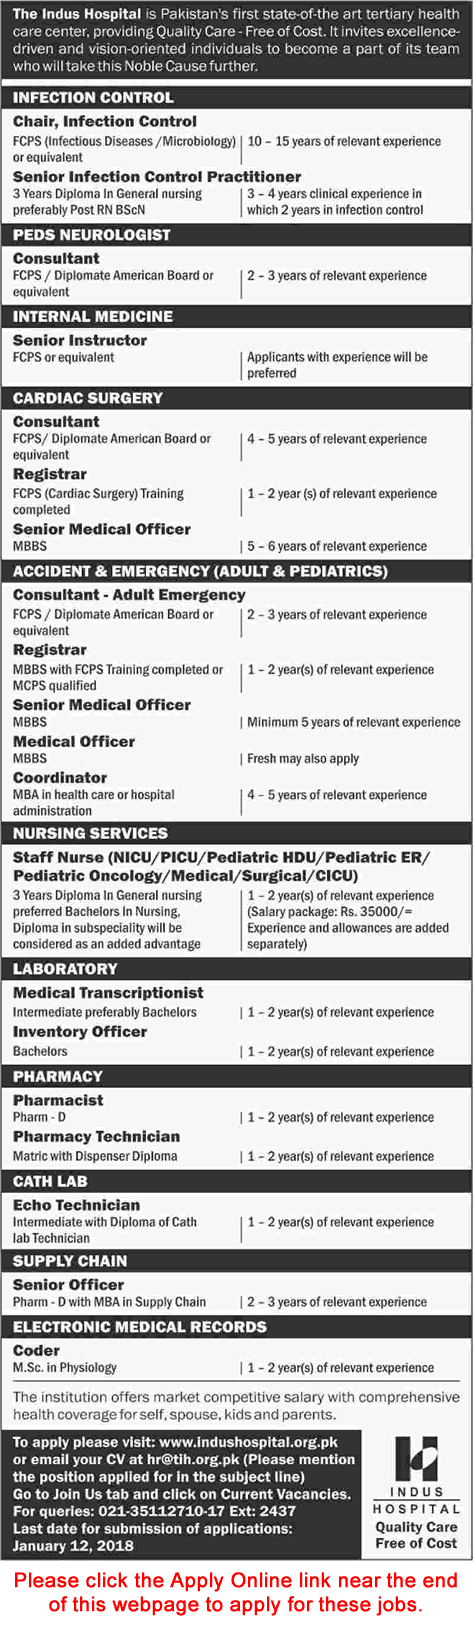 Indus Hospital Karachi Jobs December 2017 / 2018 Apply Online Nurses, Medical Officers & Others Latest